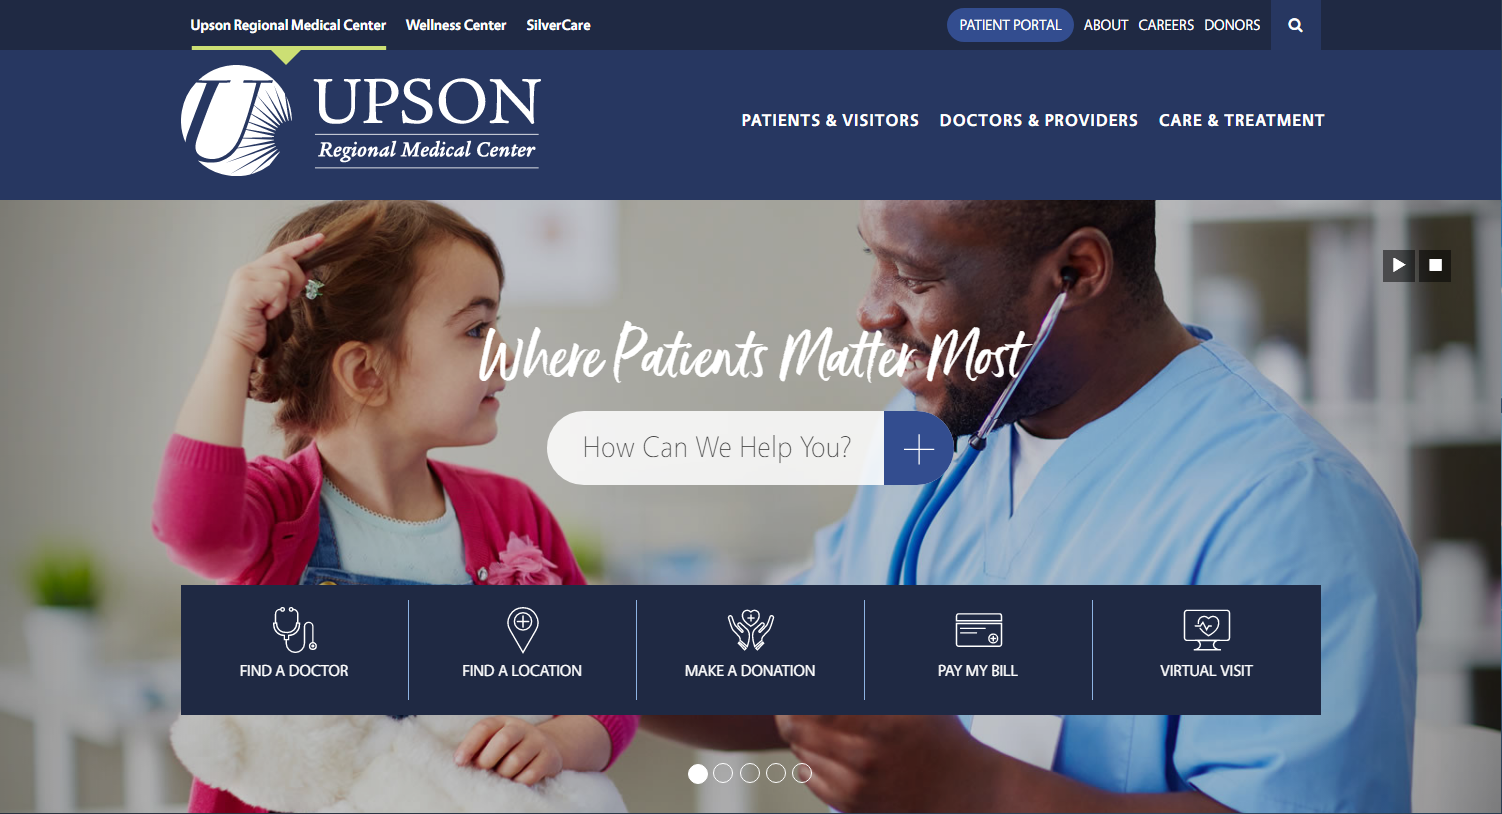 Upson Regional Medical Center | Well-structured, Financial Bank Website Design and Website Development